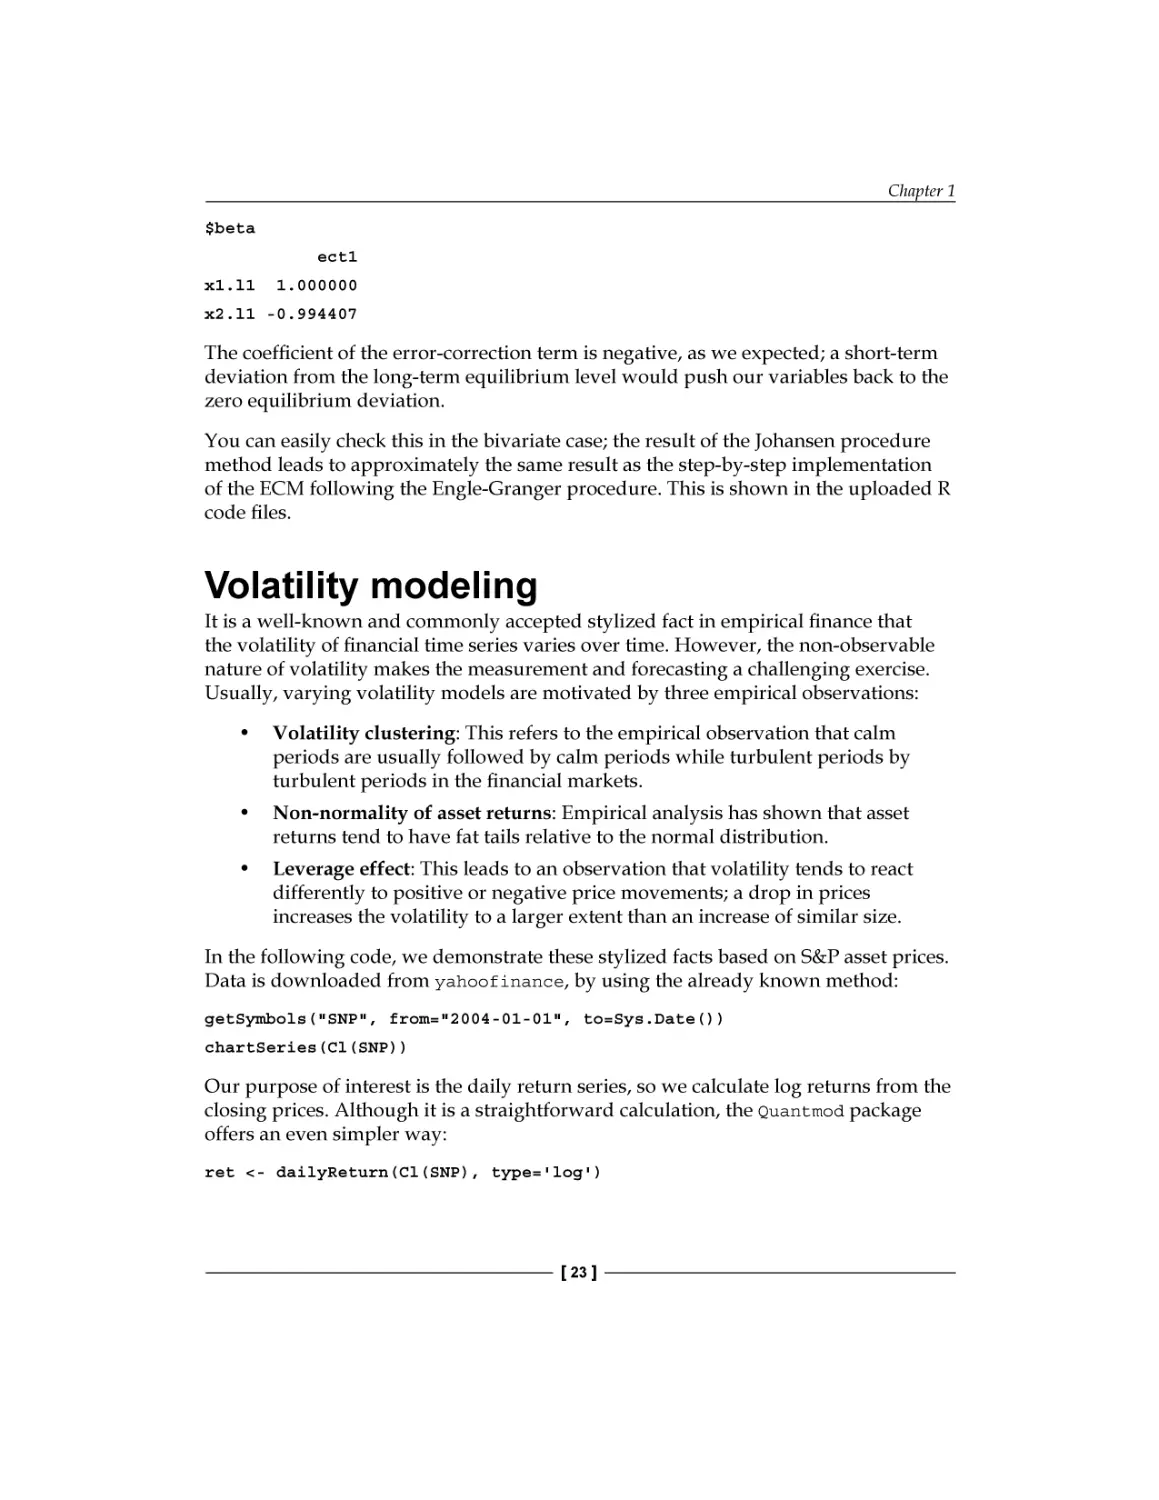 Volatility modeling